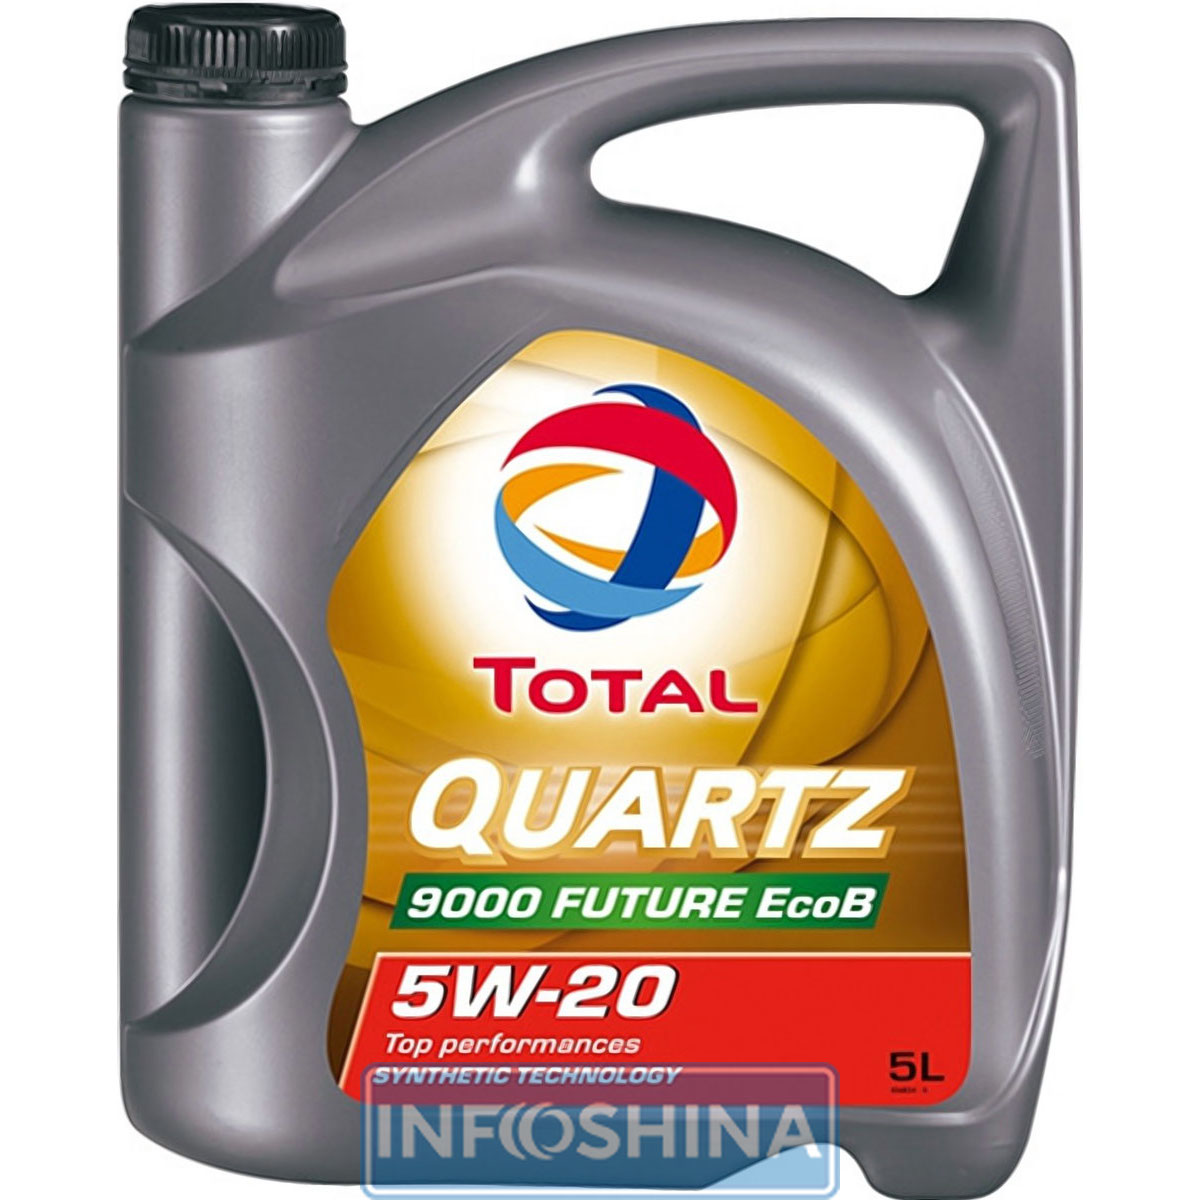 Total Quartz 9000 Future EcoB 5W-20